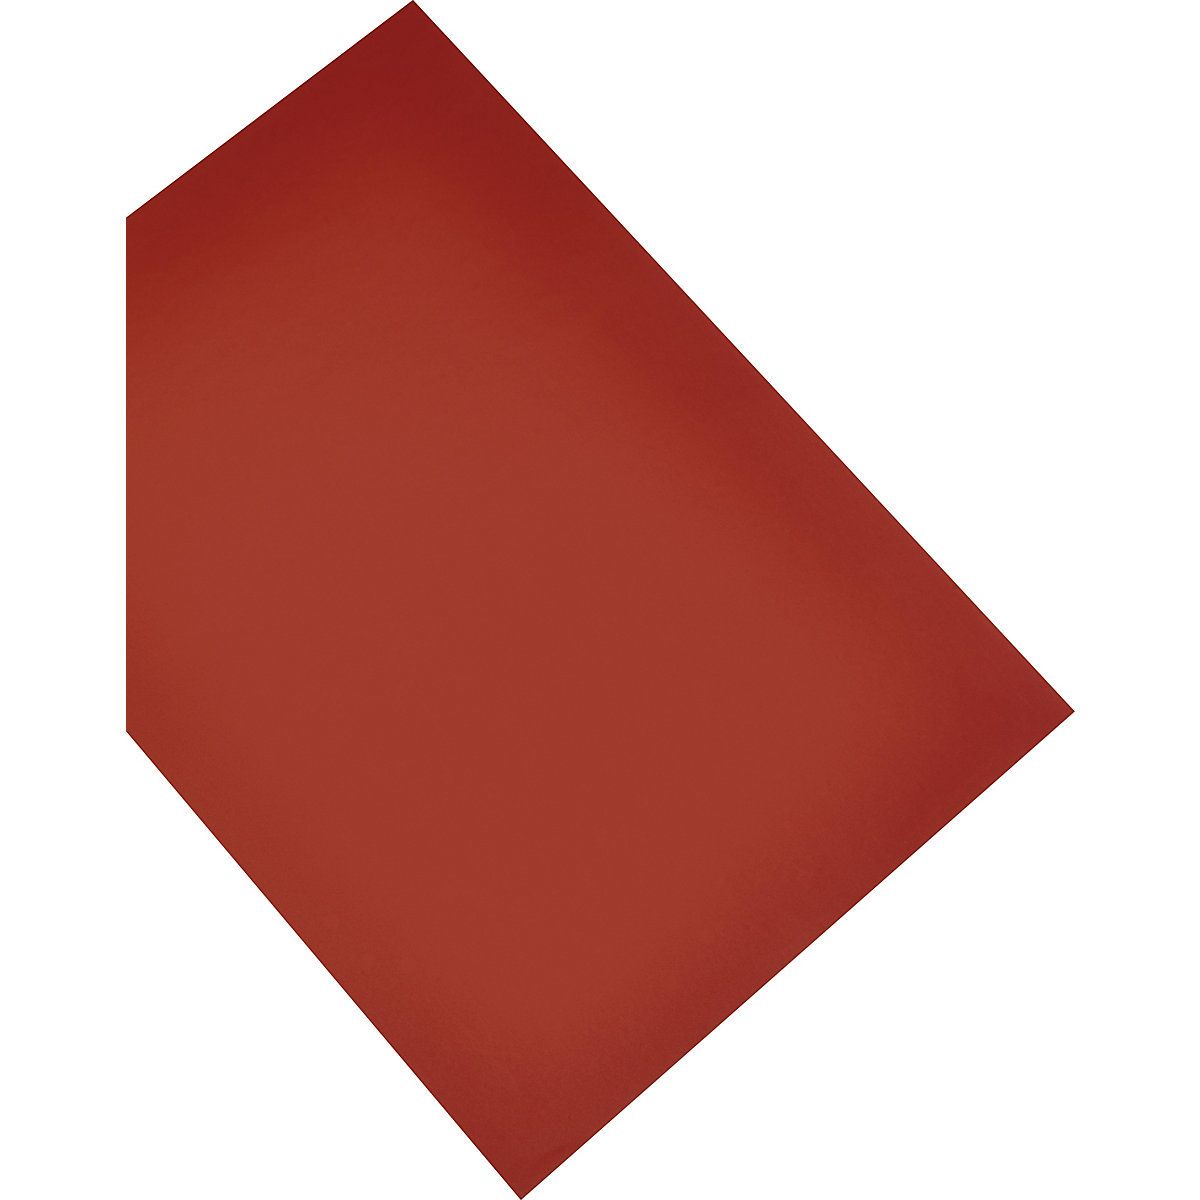 Magnetisch papier – magnetoplan, A4, VE = 2 stuks, rood-9